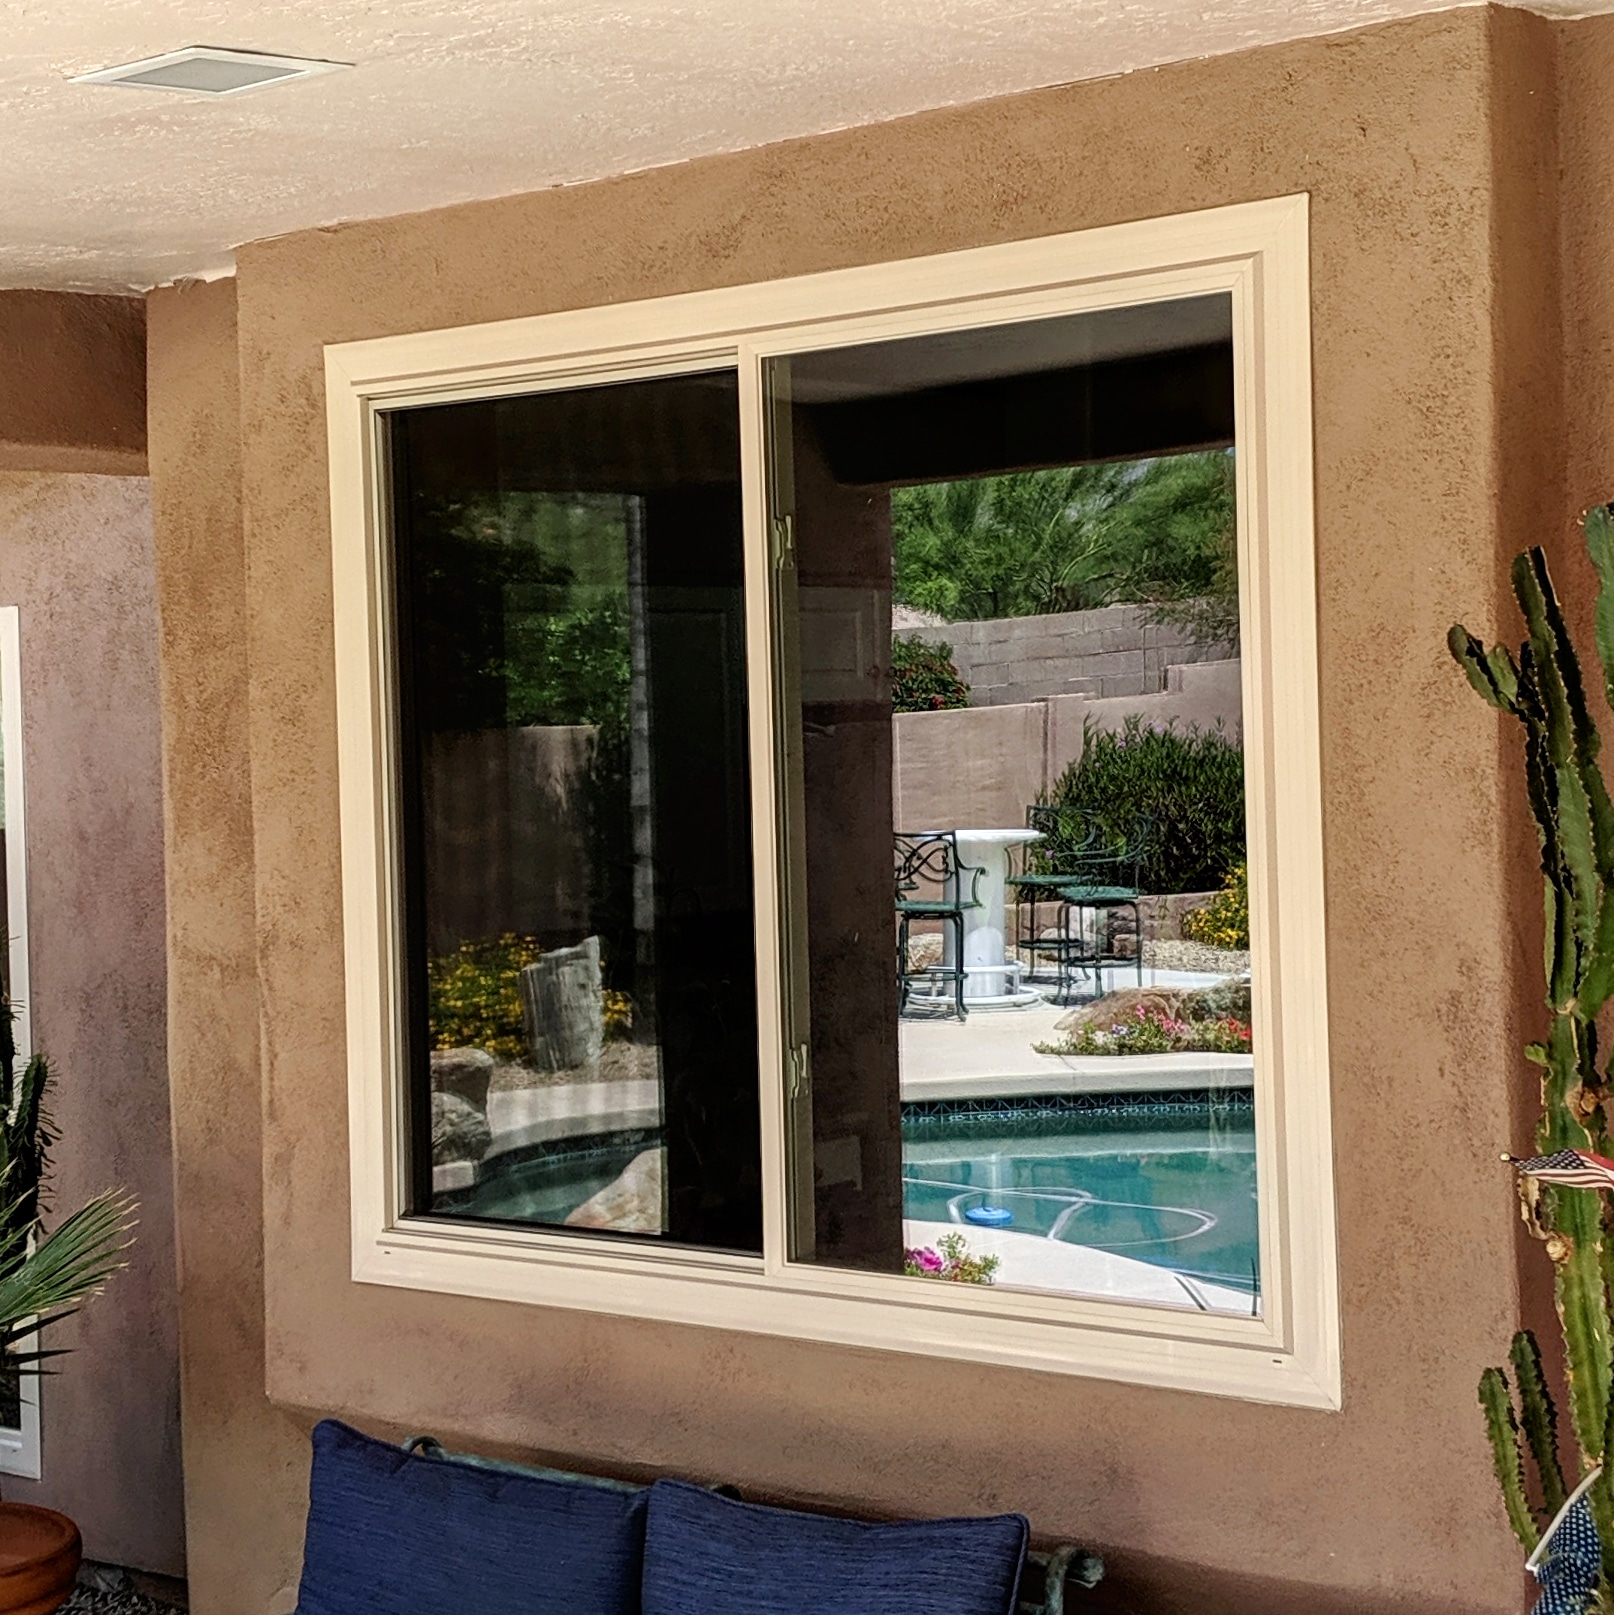 Arizona Window and Door in Scottsdale and Tucson showing home sliding window